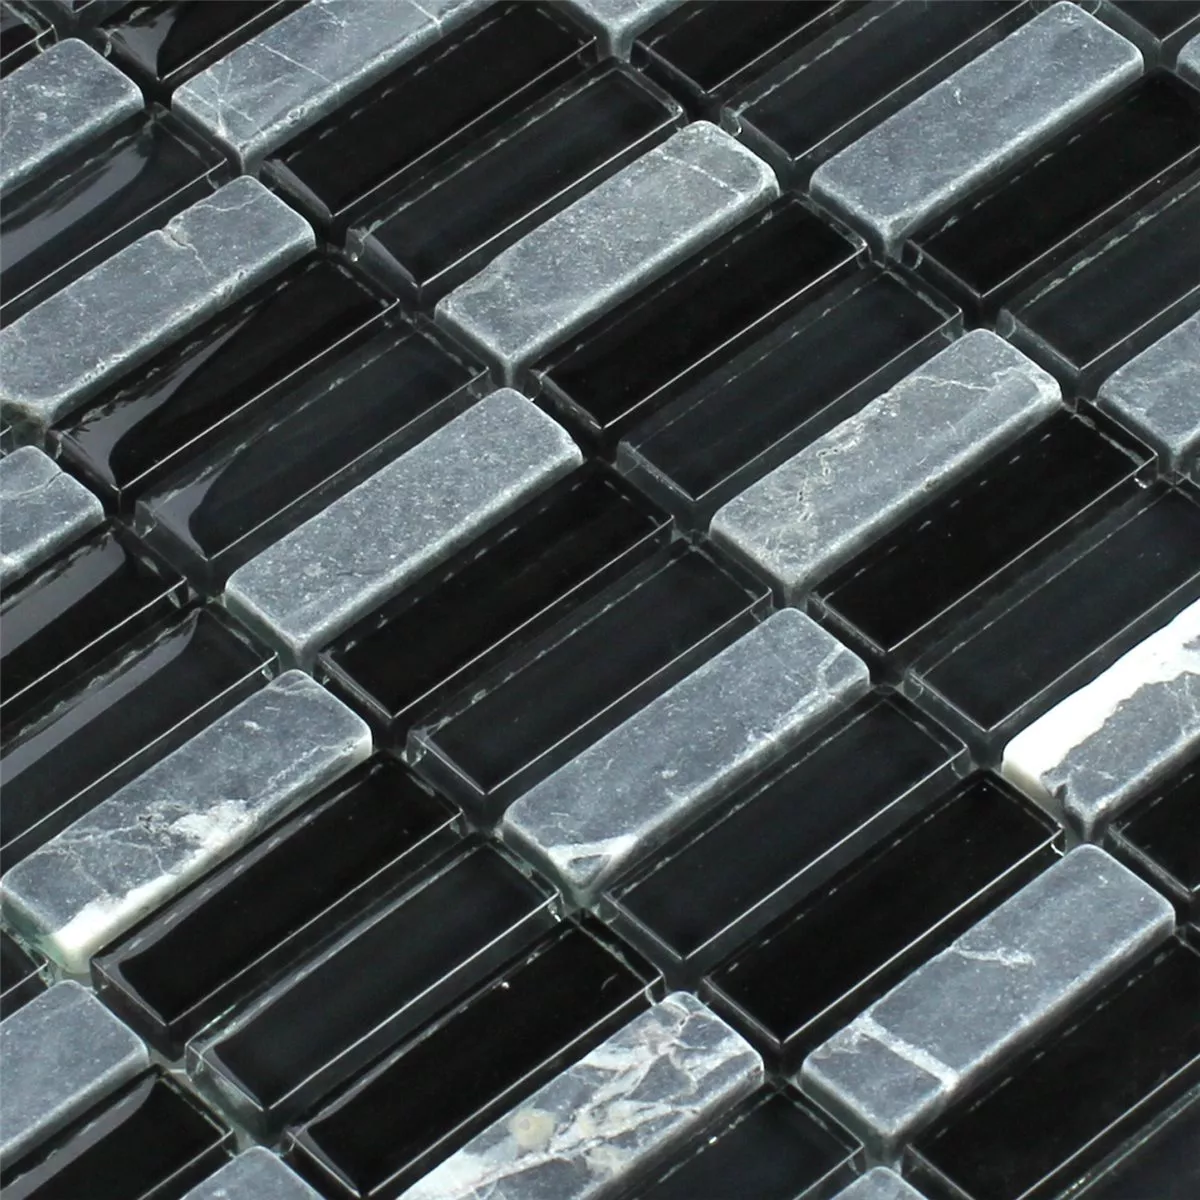 Mosaic Tiles Glass Marble Black Grey Mix